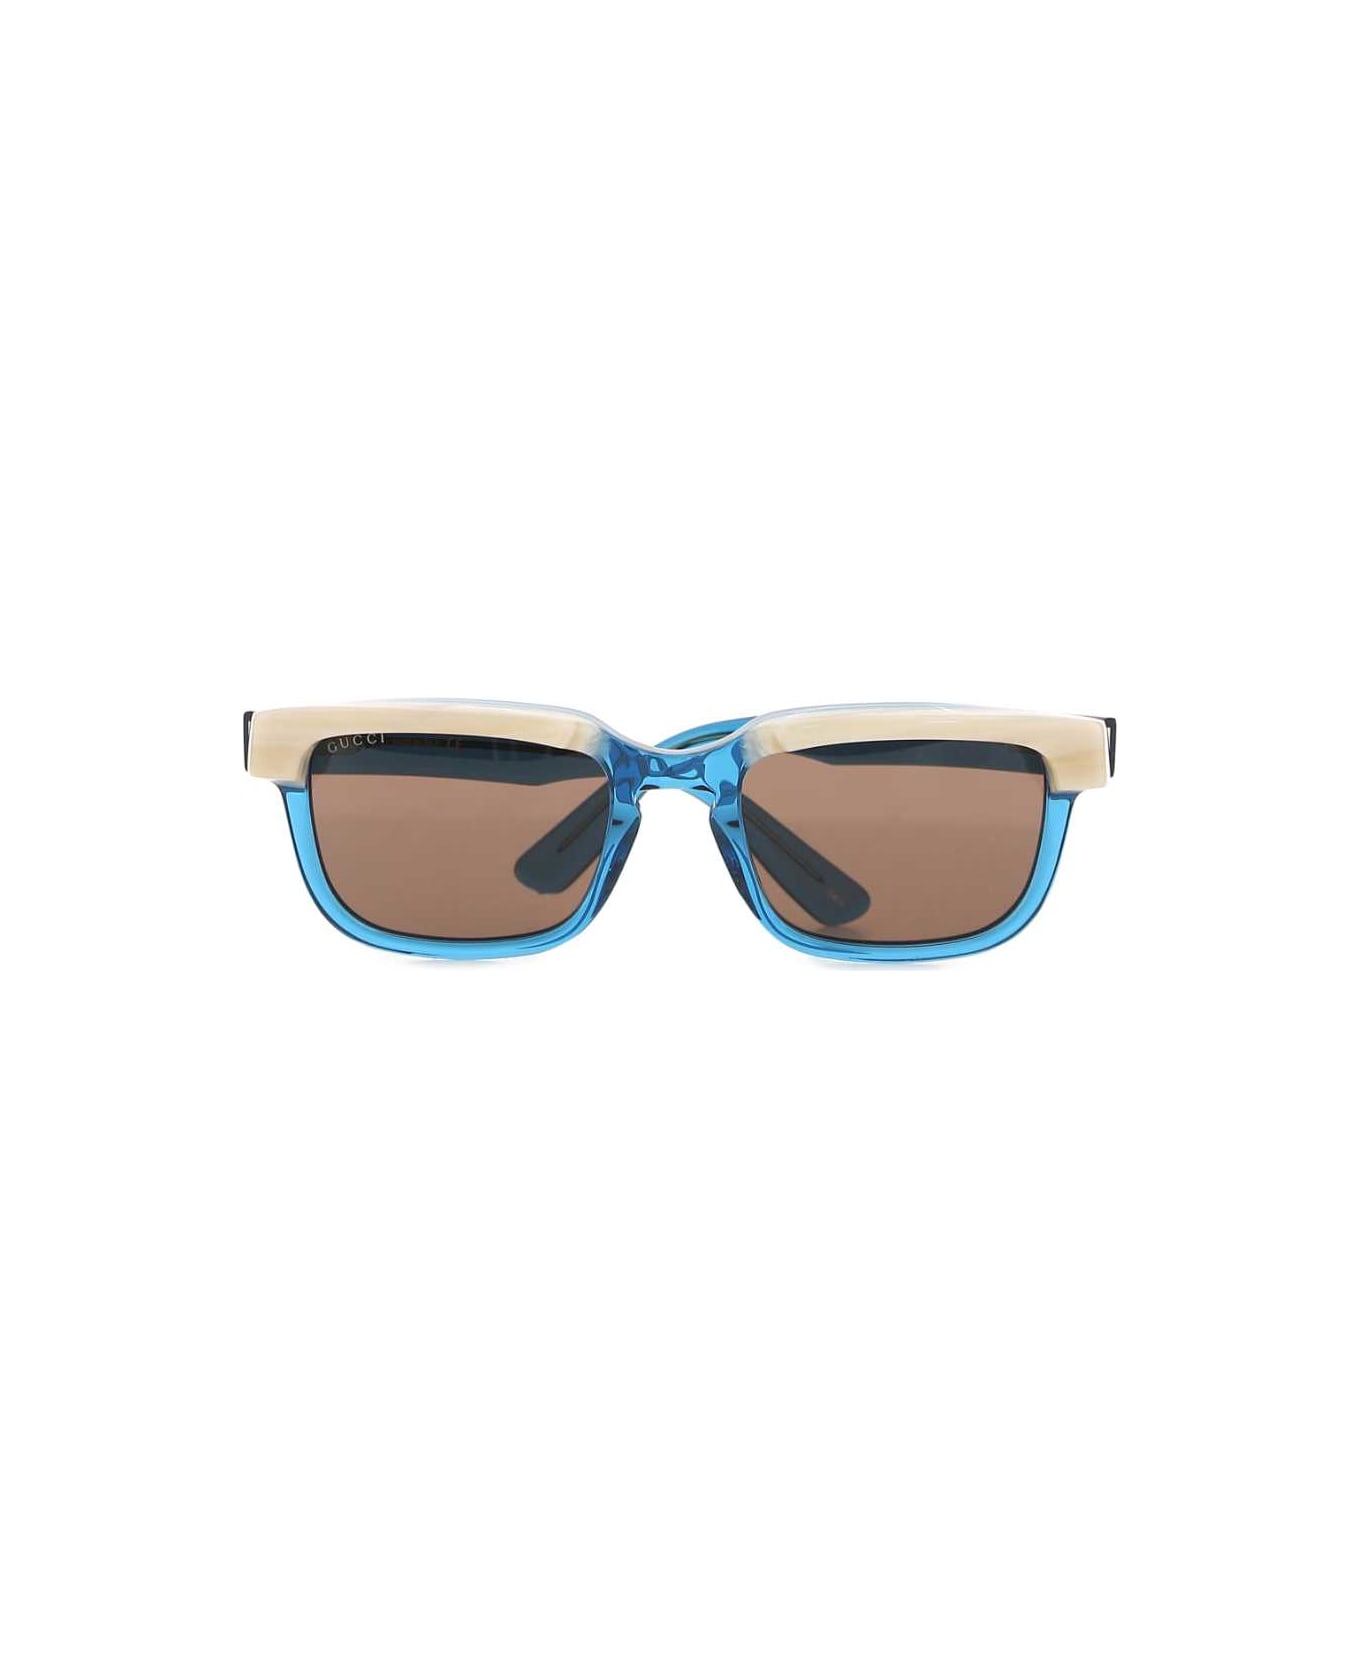 Gucci Light Blue Acetate Sunglasses - 4623